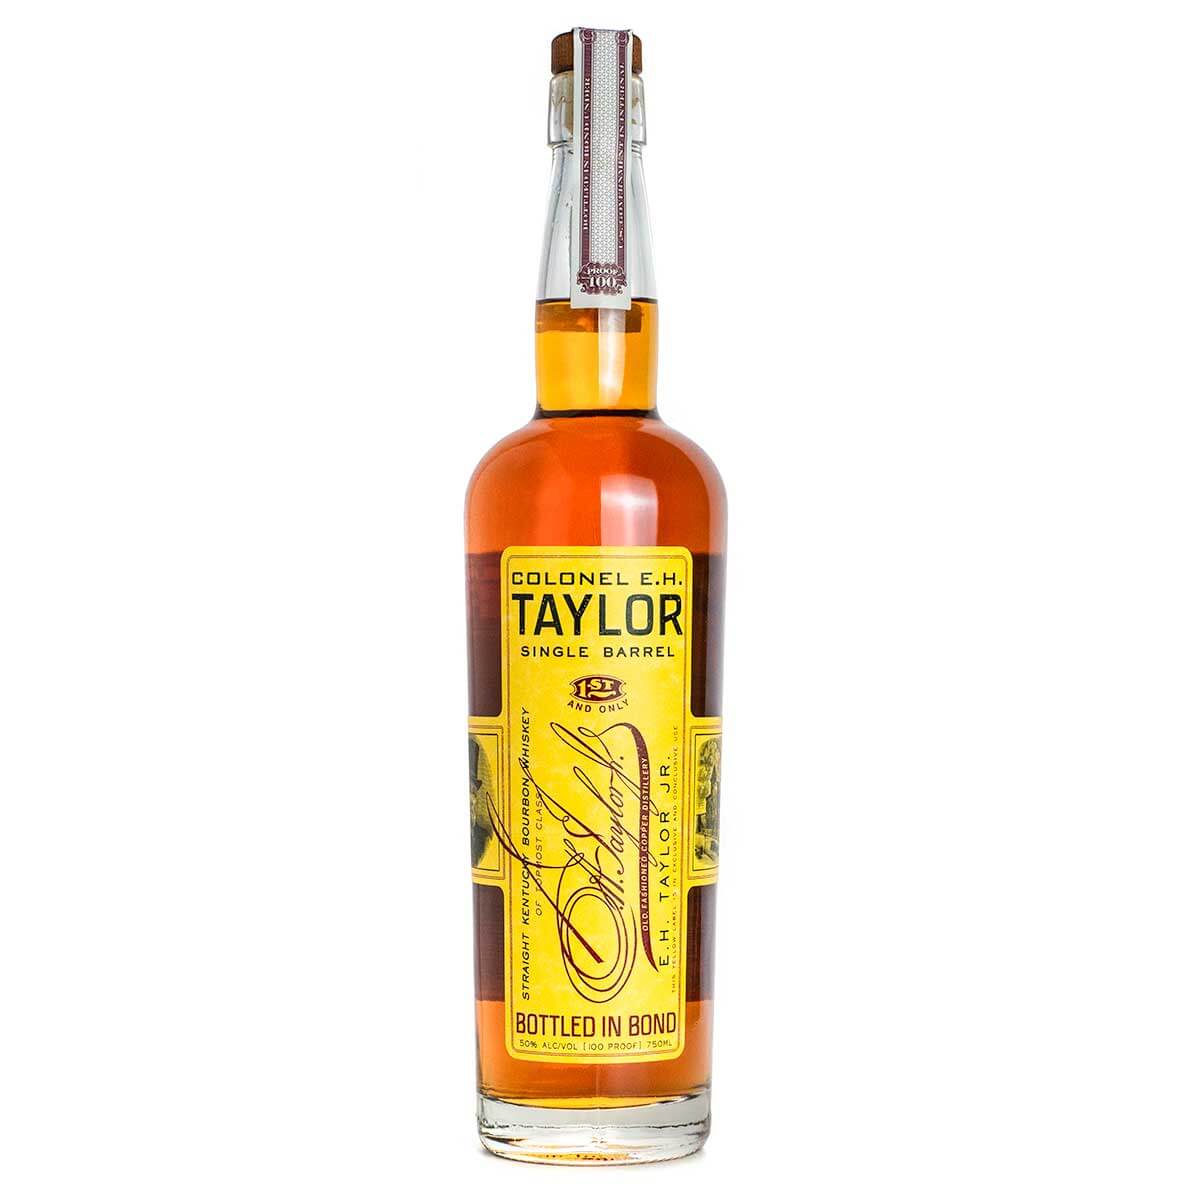 E. H. Taylor, Jr. Single Barrel bottle